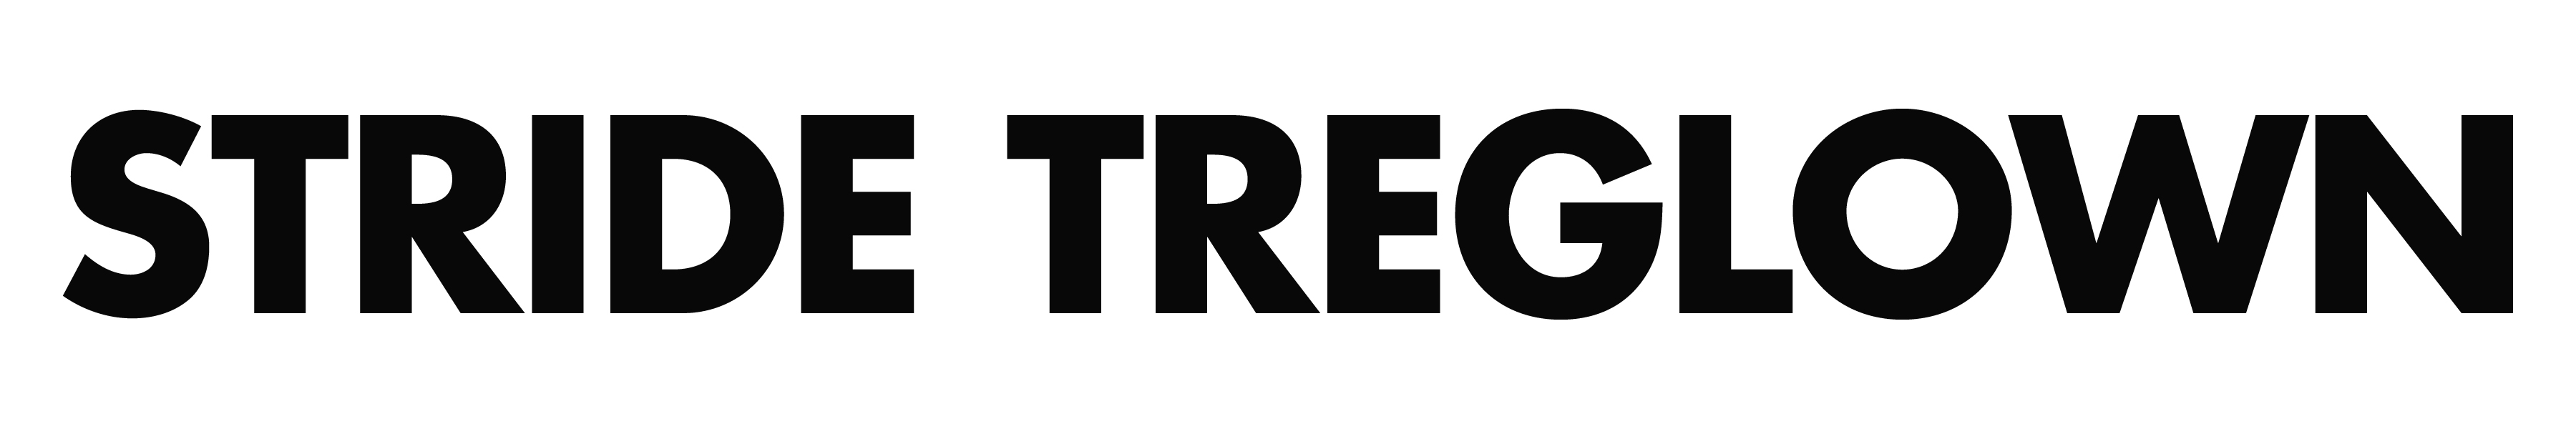 logo for Stride Treglown Ltd.